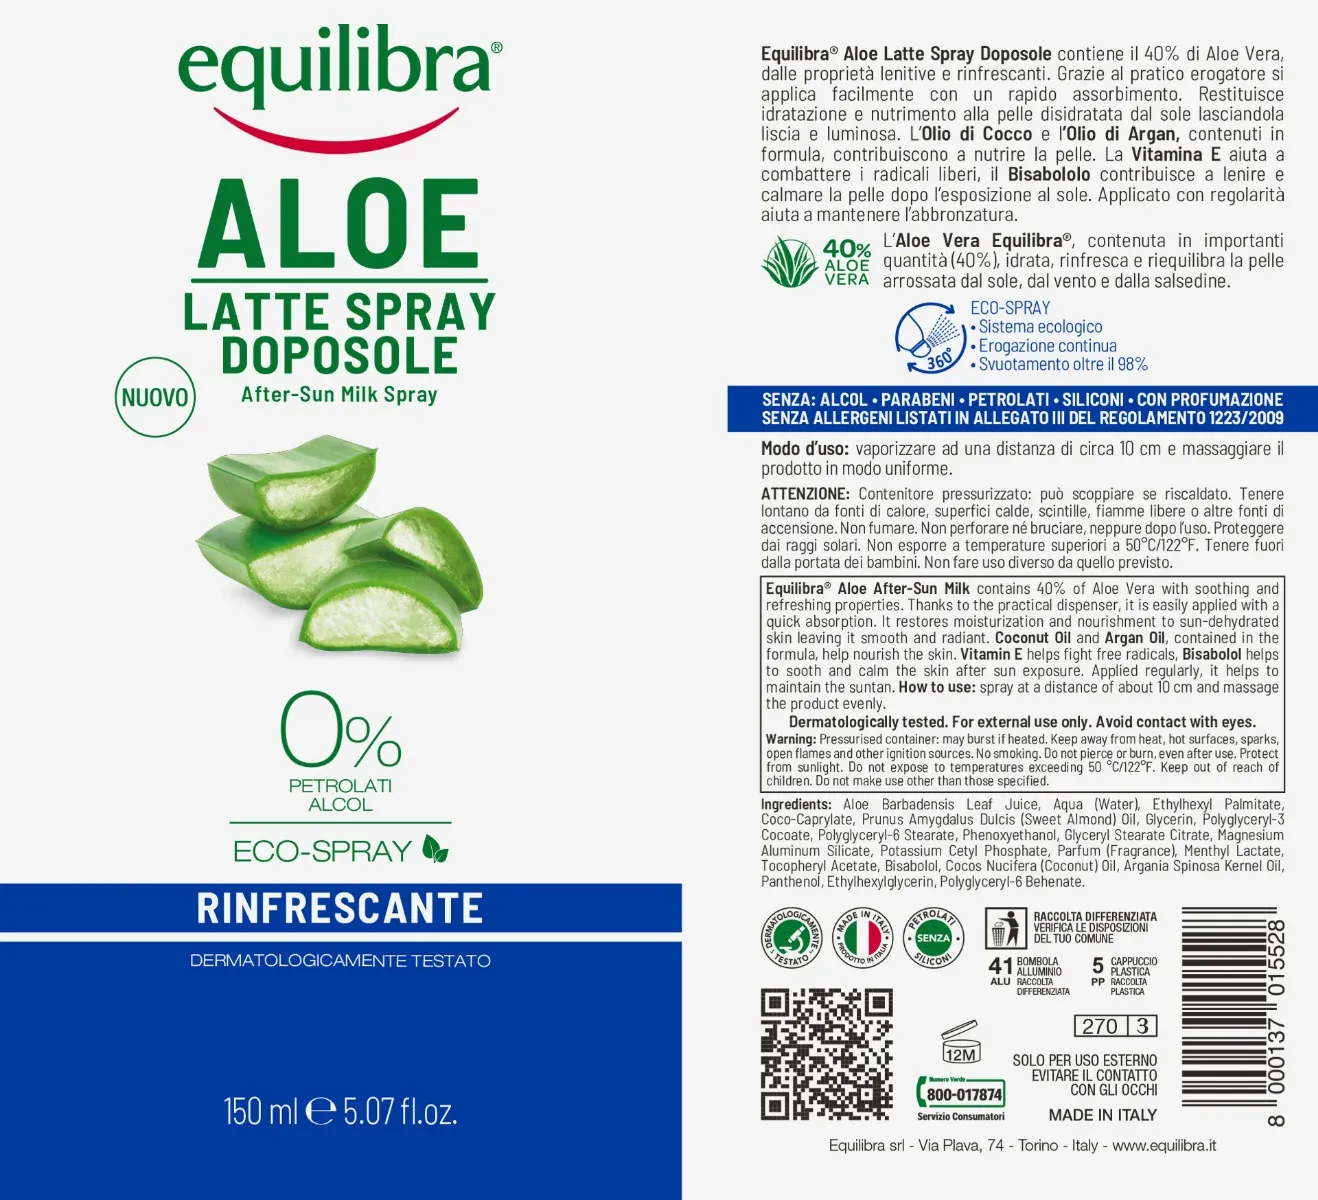 Equilibra Aloe Latte Doposole Spray 150 ml Effetto rinfrescante